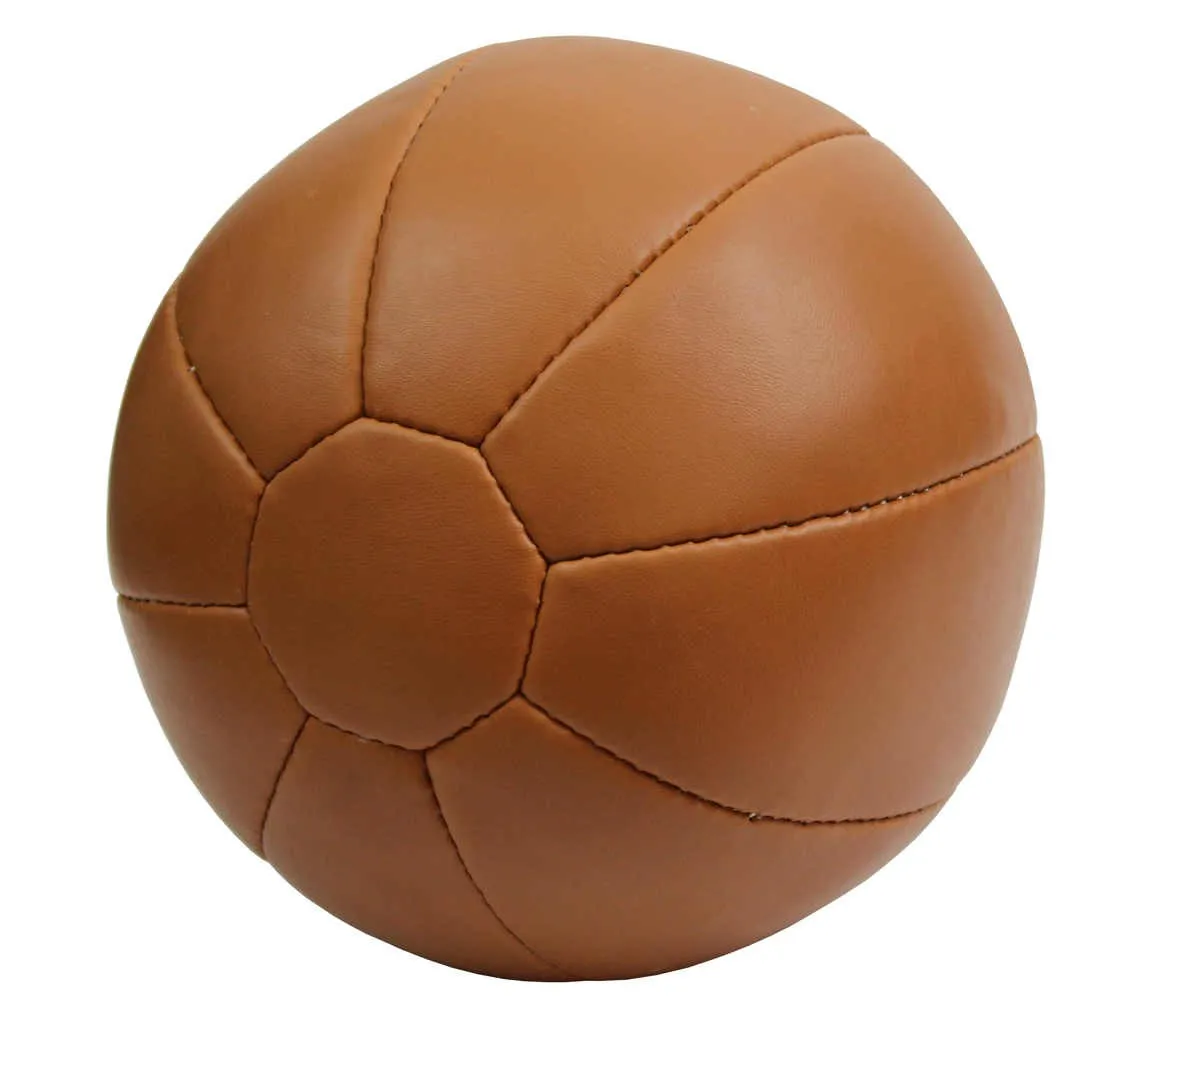 Medizinball 7 kg en cuir synthetique Slamball